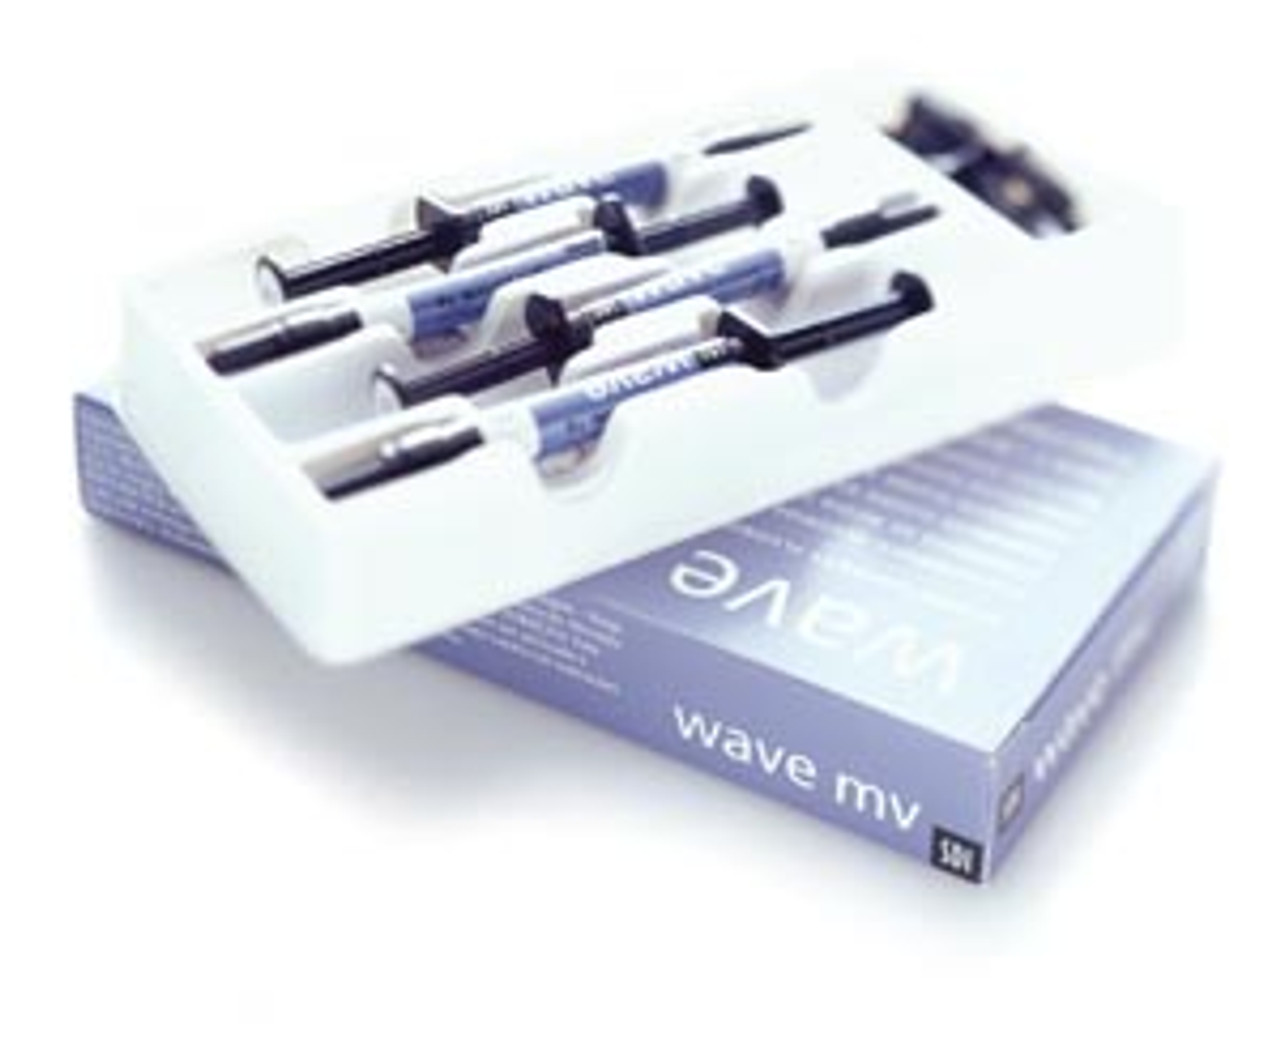 SDI Wave Flowable Composites, Wave MV Syringe Refill - Shade B1 Light, 1 x 1g Syringe, 5 Applicator Tips 8311101